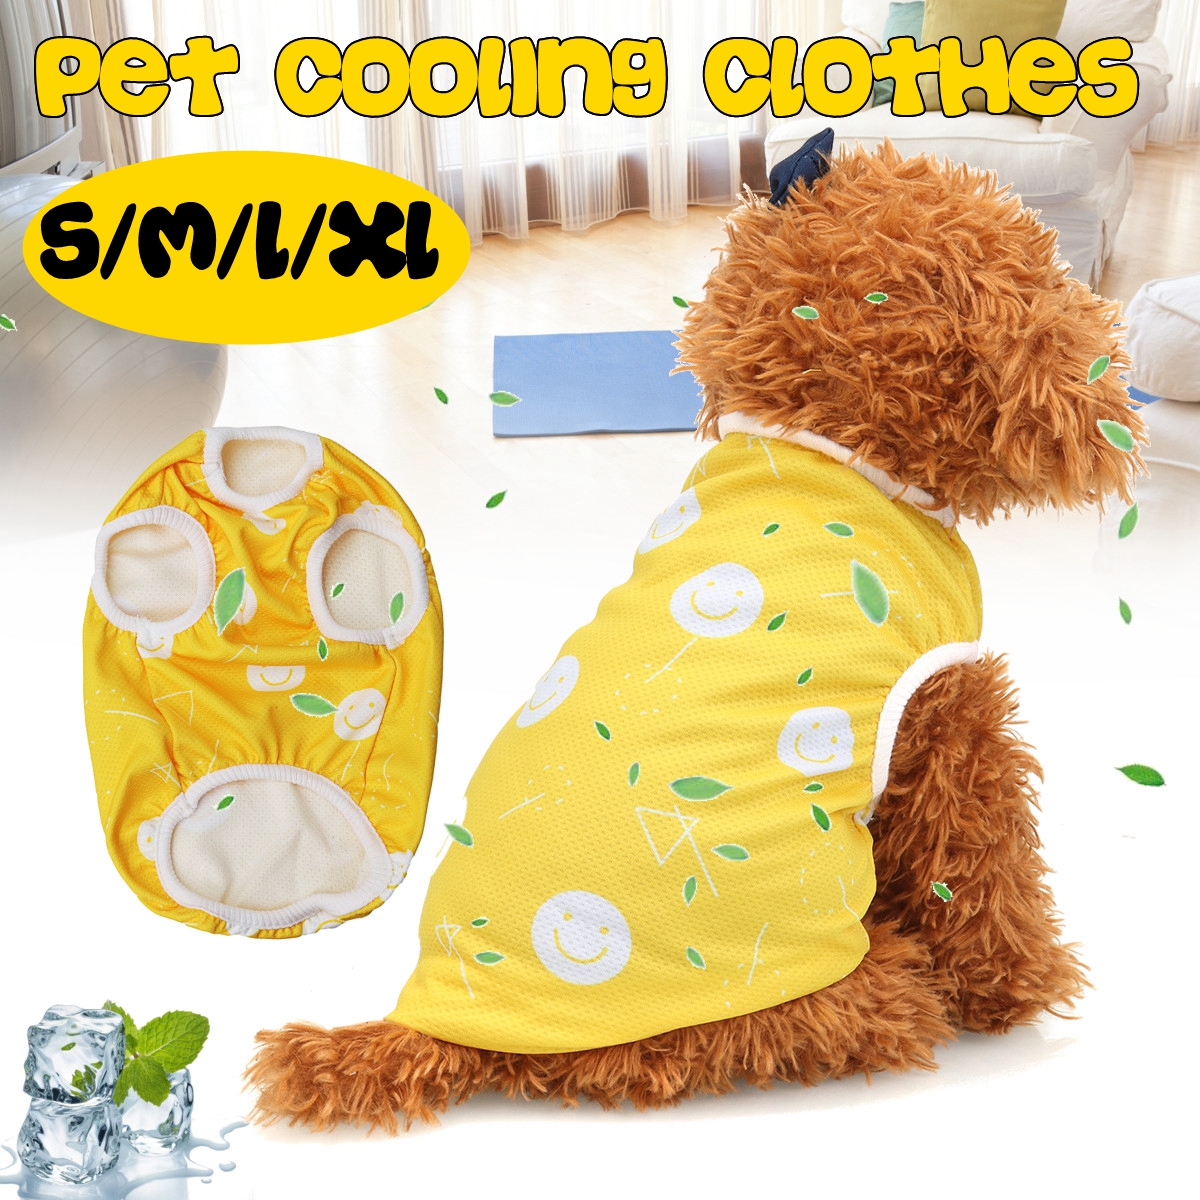 Pet-T-shirt-Dog-Vest-Coat-Breathable-Sunscreen-Cooling-Clothing-Jacket-Clothes-1341264-2